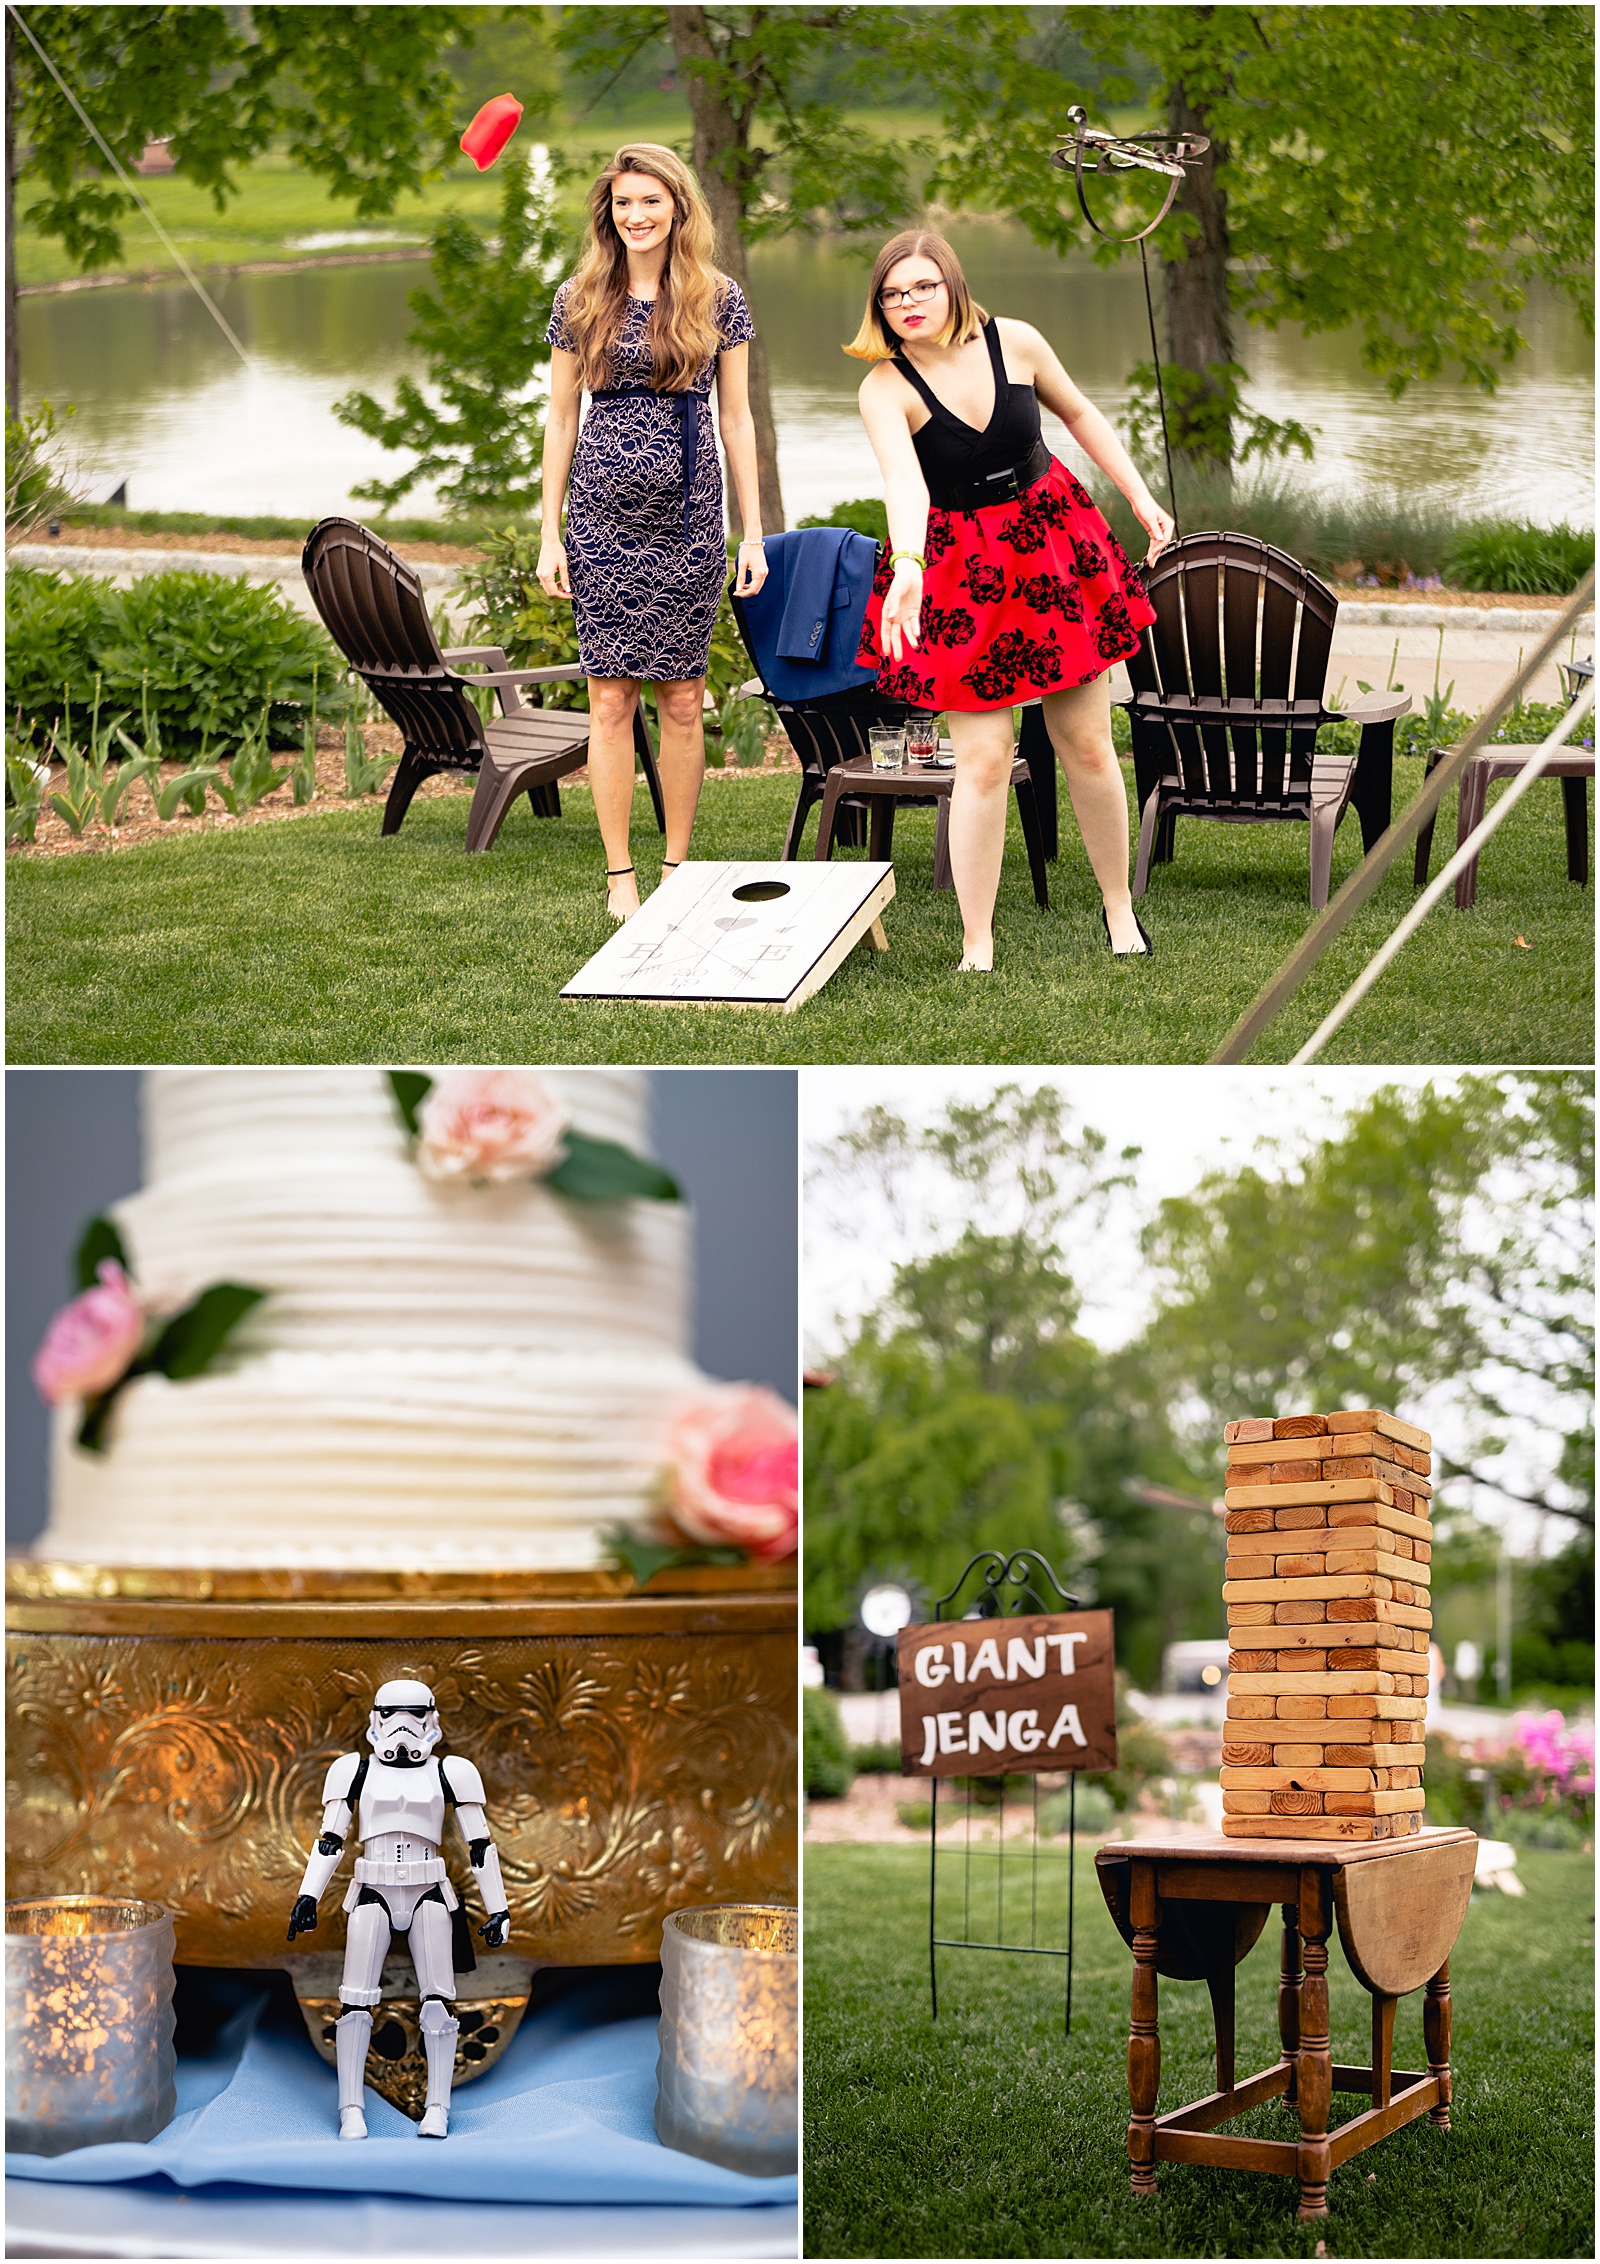 Gen_Palmer_Photography_Estate_At-Eagle_Lake_NJ_Reception_Details_Wedding_Lawn_Games_Giant_Jenga_Storm_Trooper_Wedding_Cake